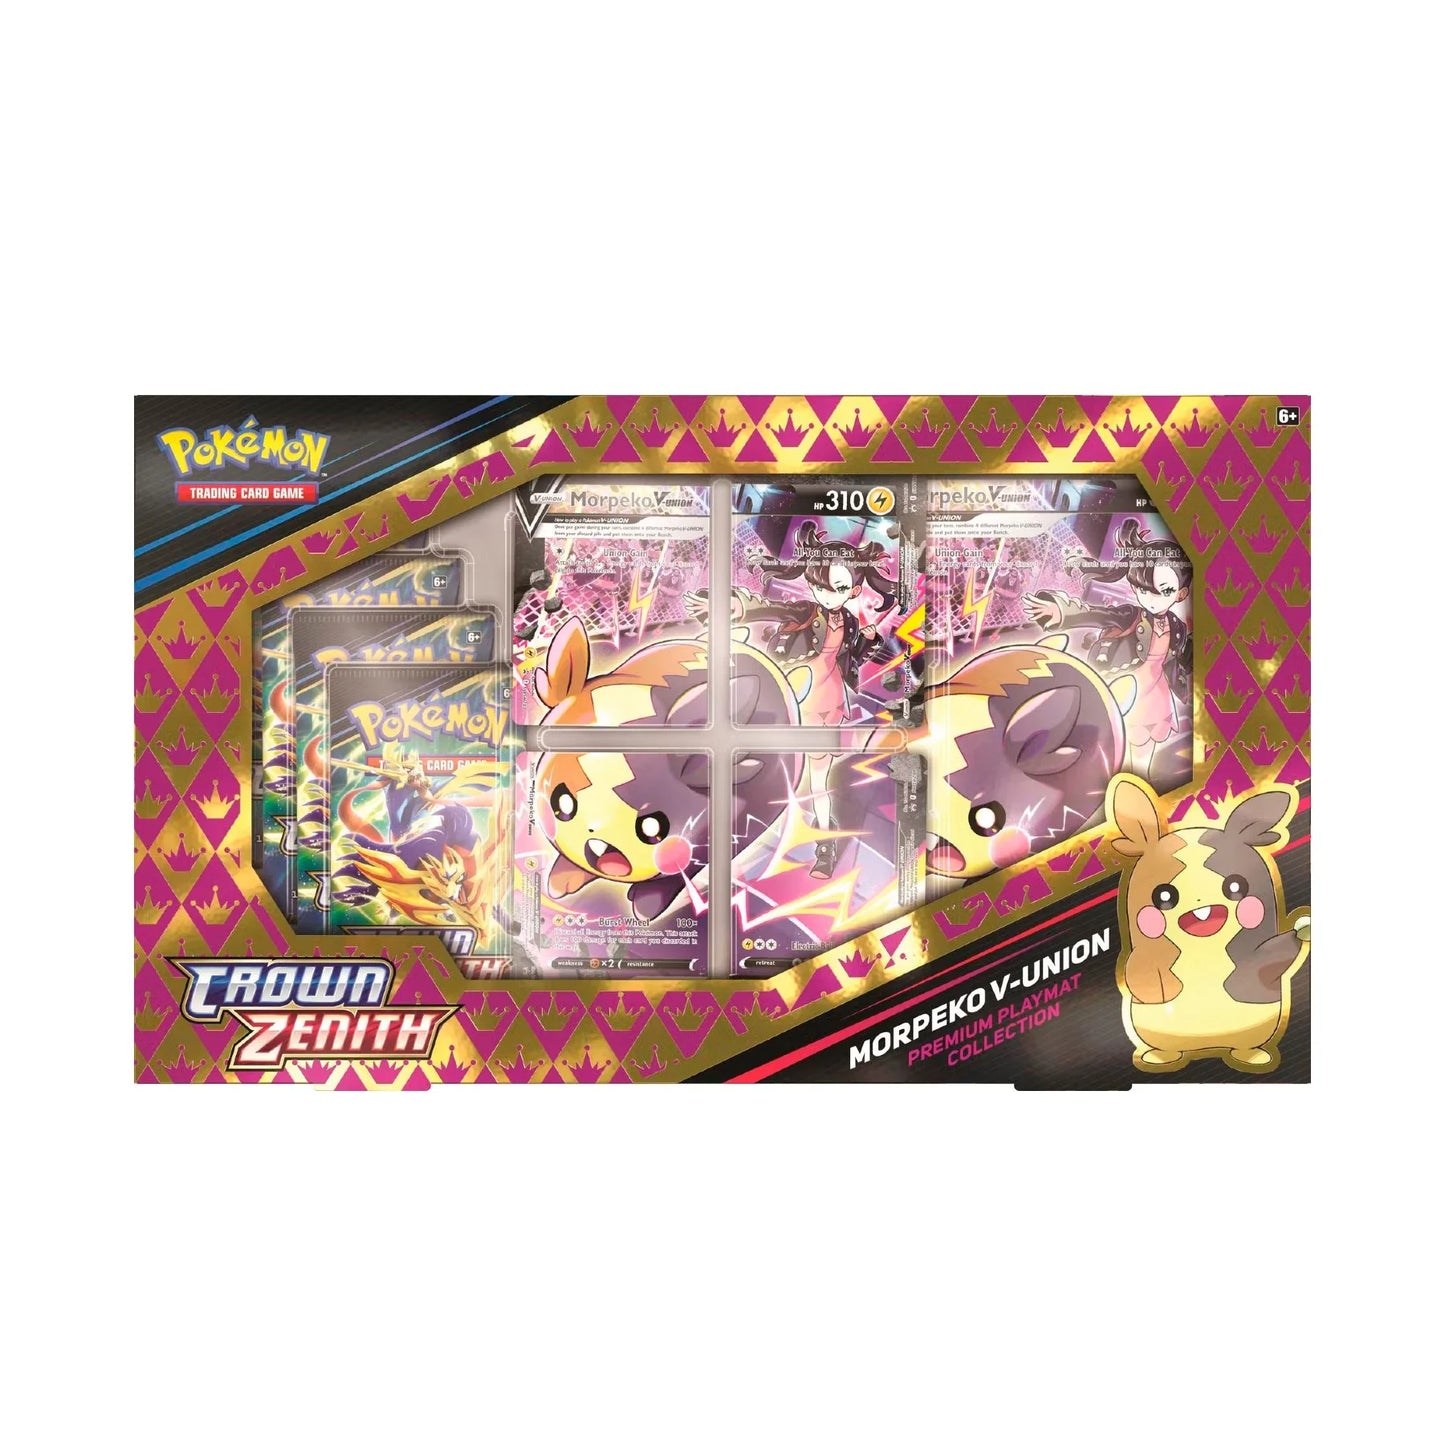 Pokemon Crown Zenith Morpeko V-Union Playmat Premium Collection